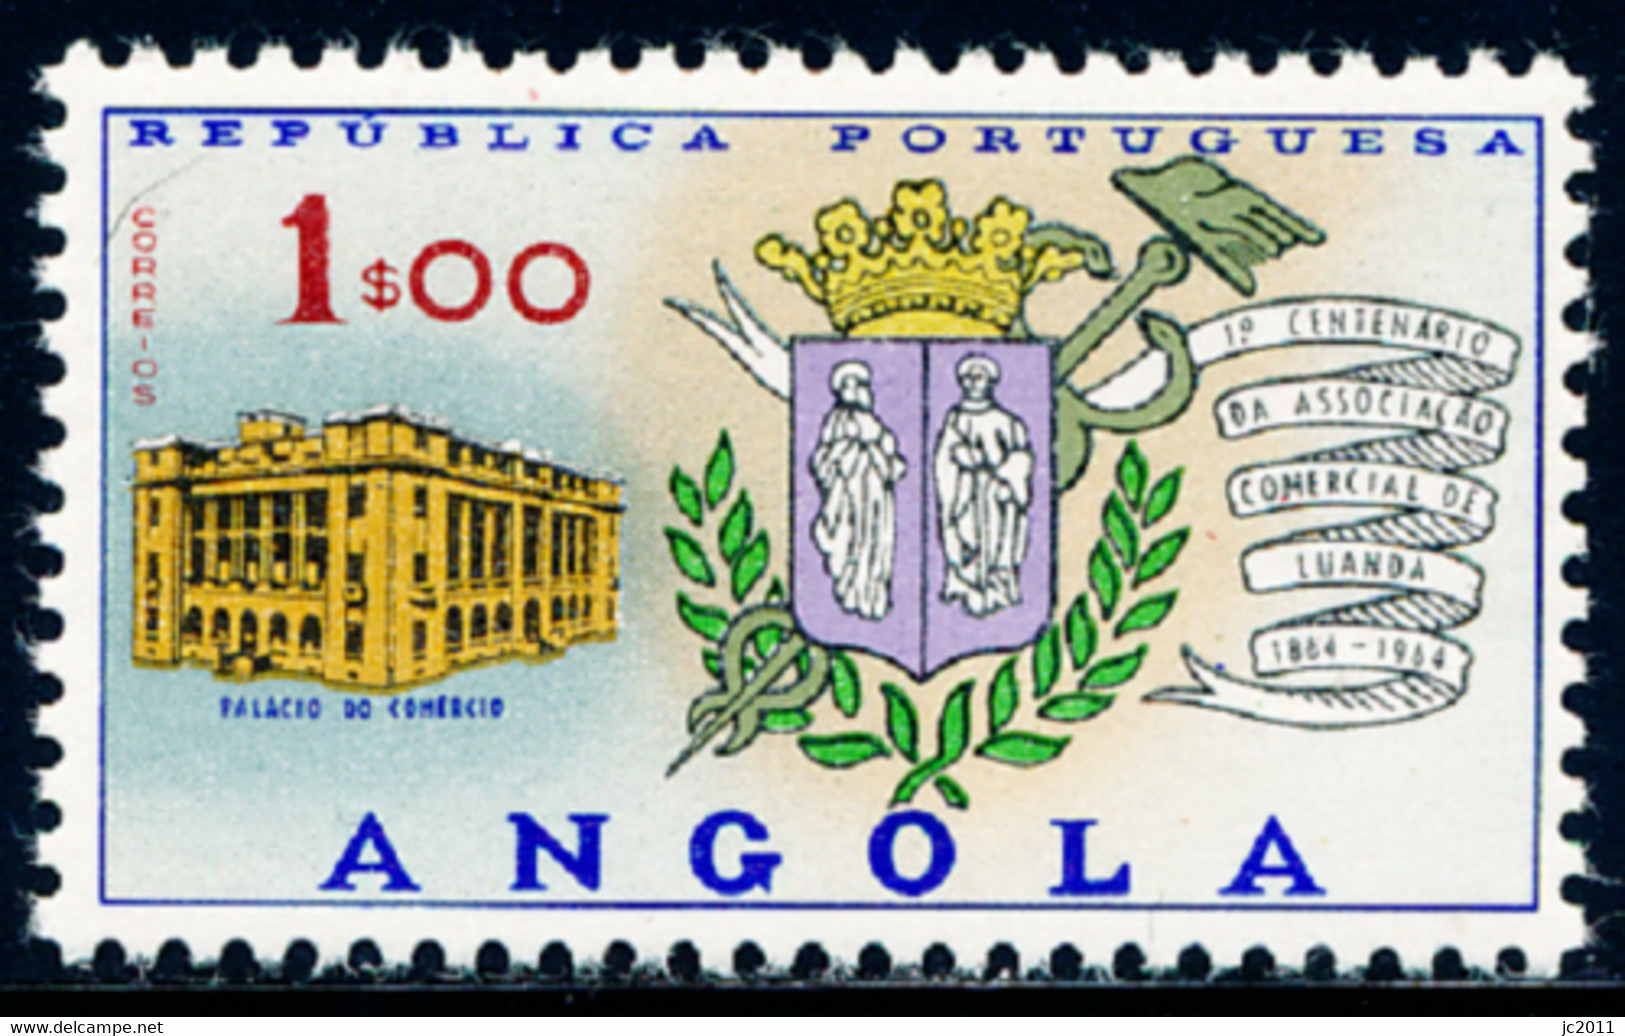 Angola - 1964 - Arms And Palace Of Commerce / Luanda - MNH - Angola